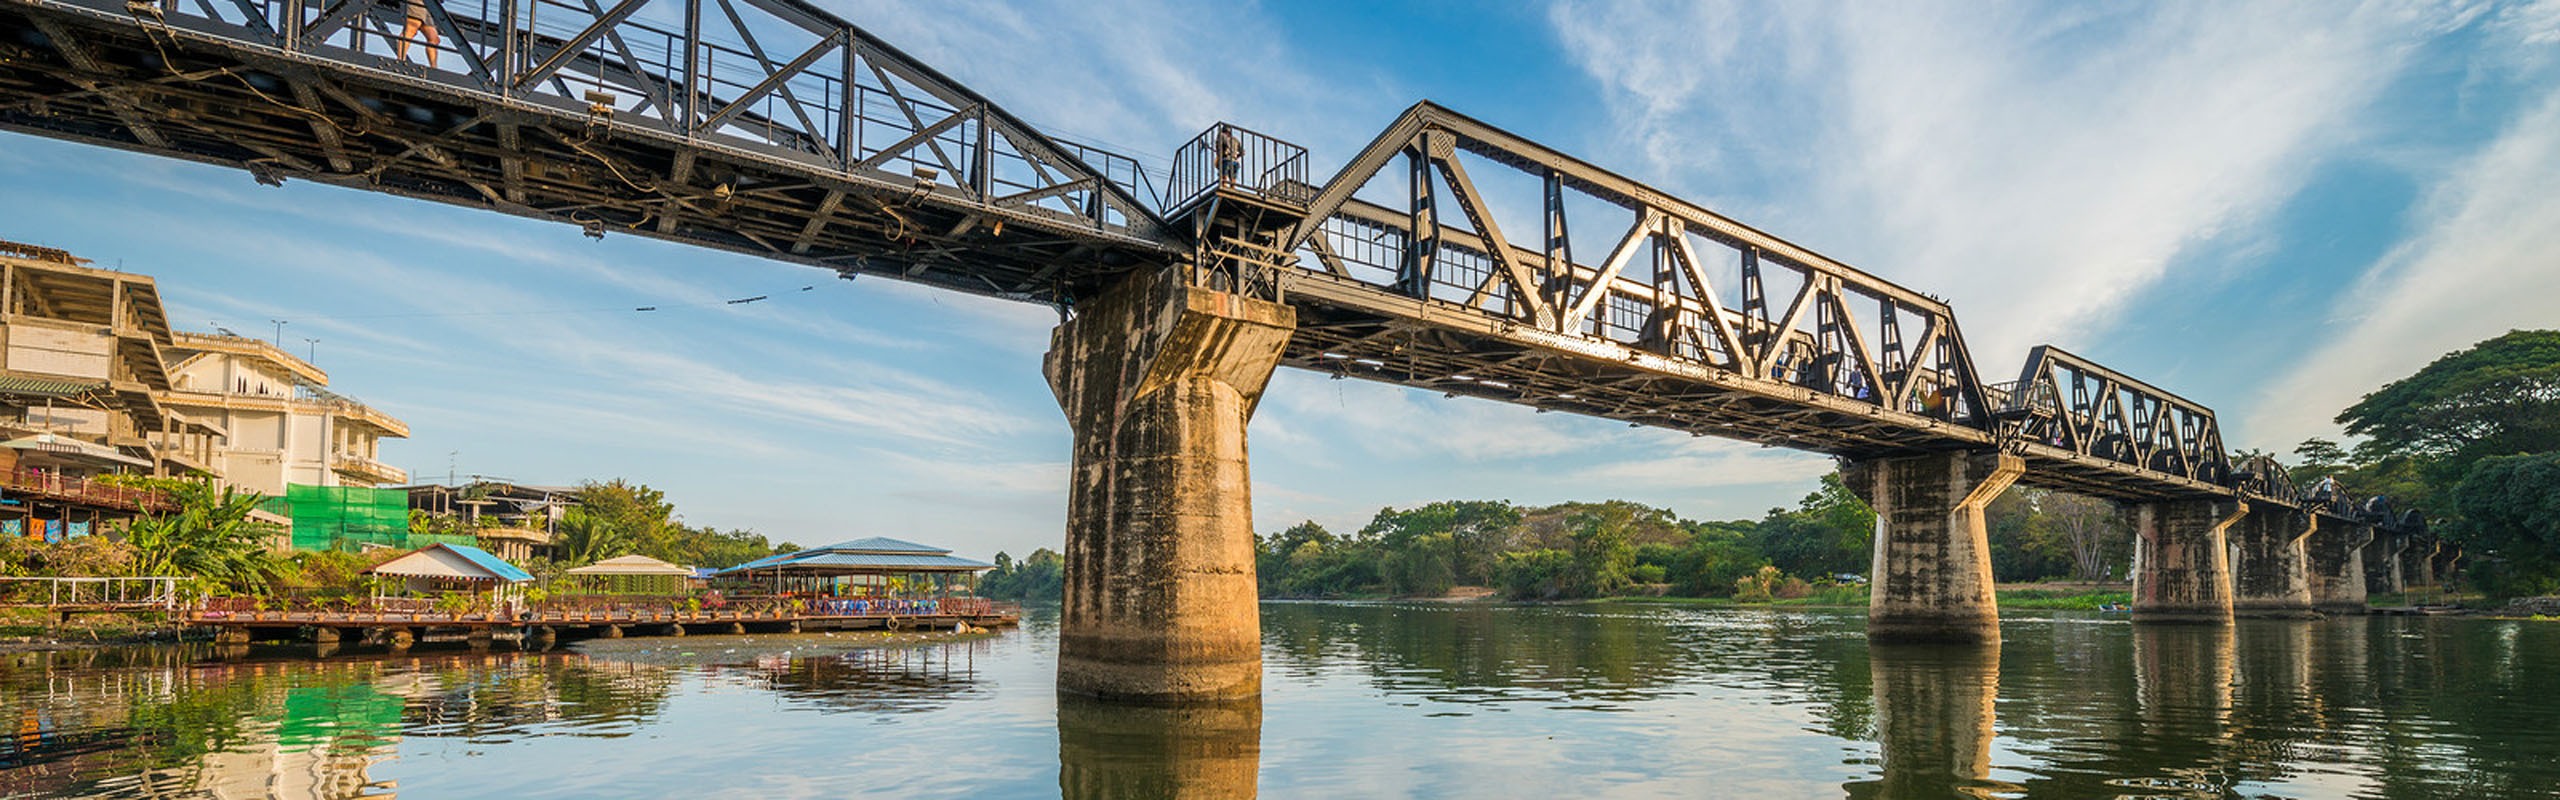 The Burma-Siam Railroad and the Bridge over the River Kwai Guide